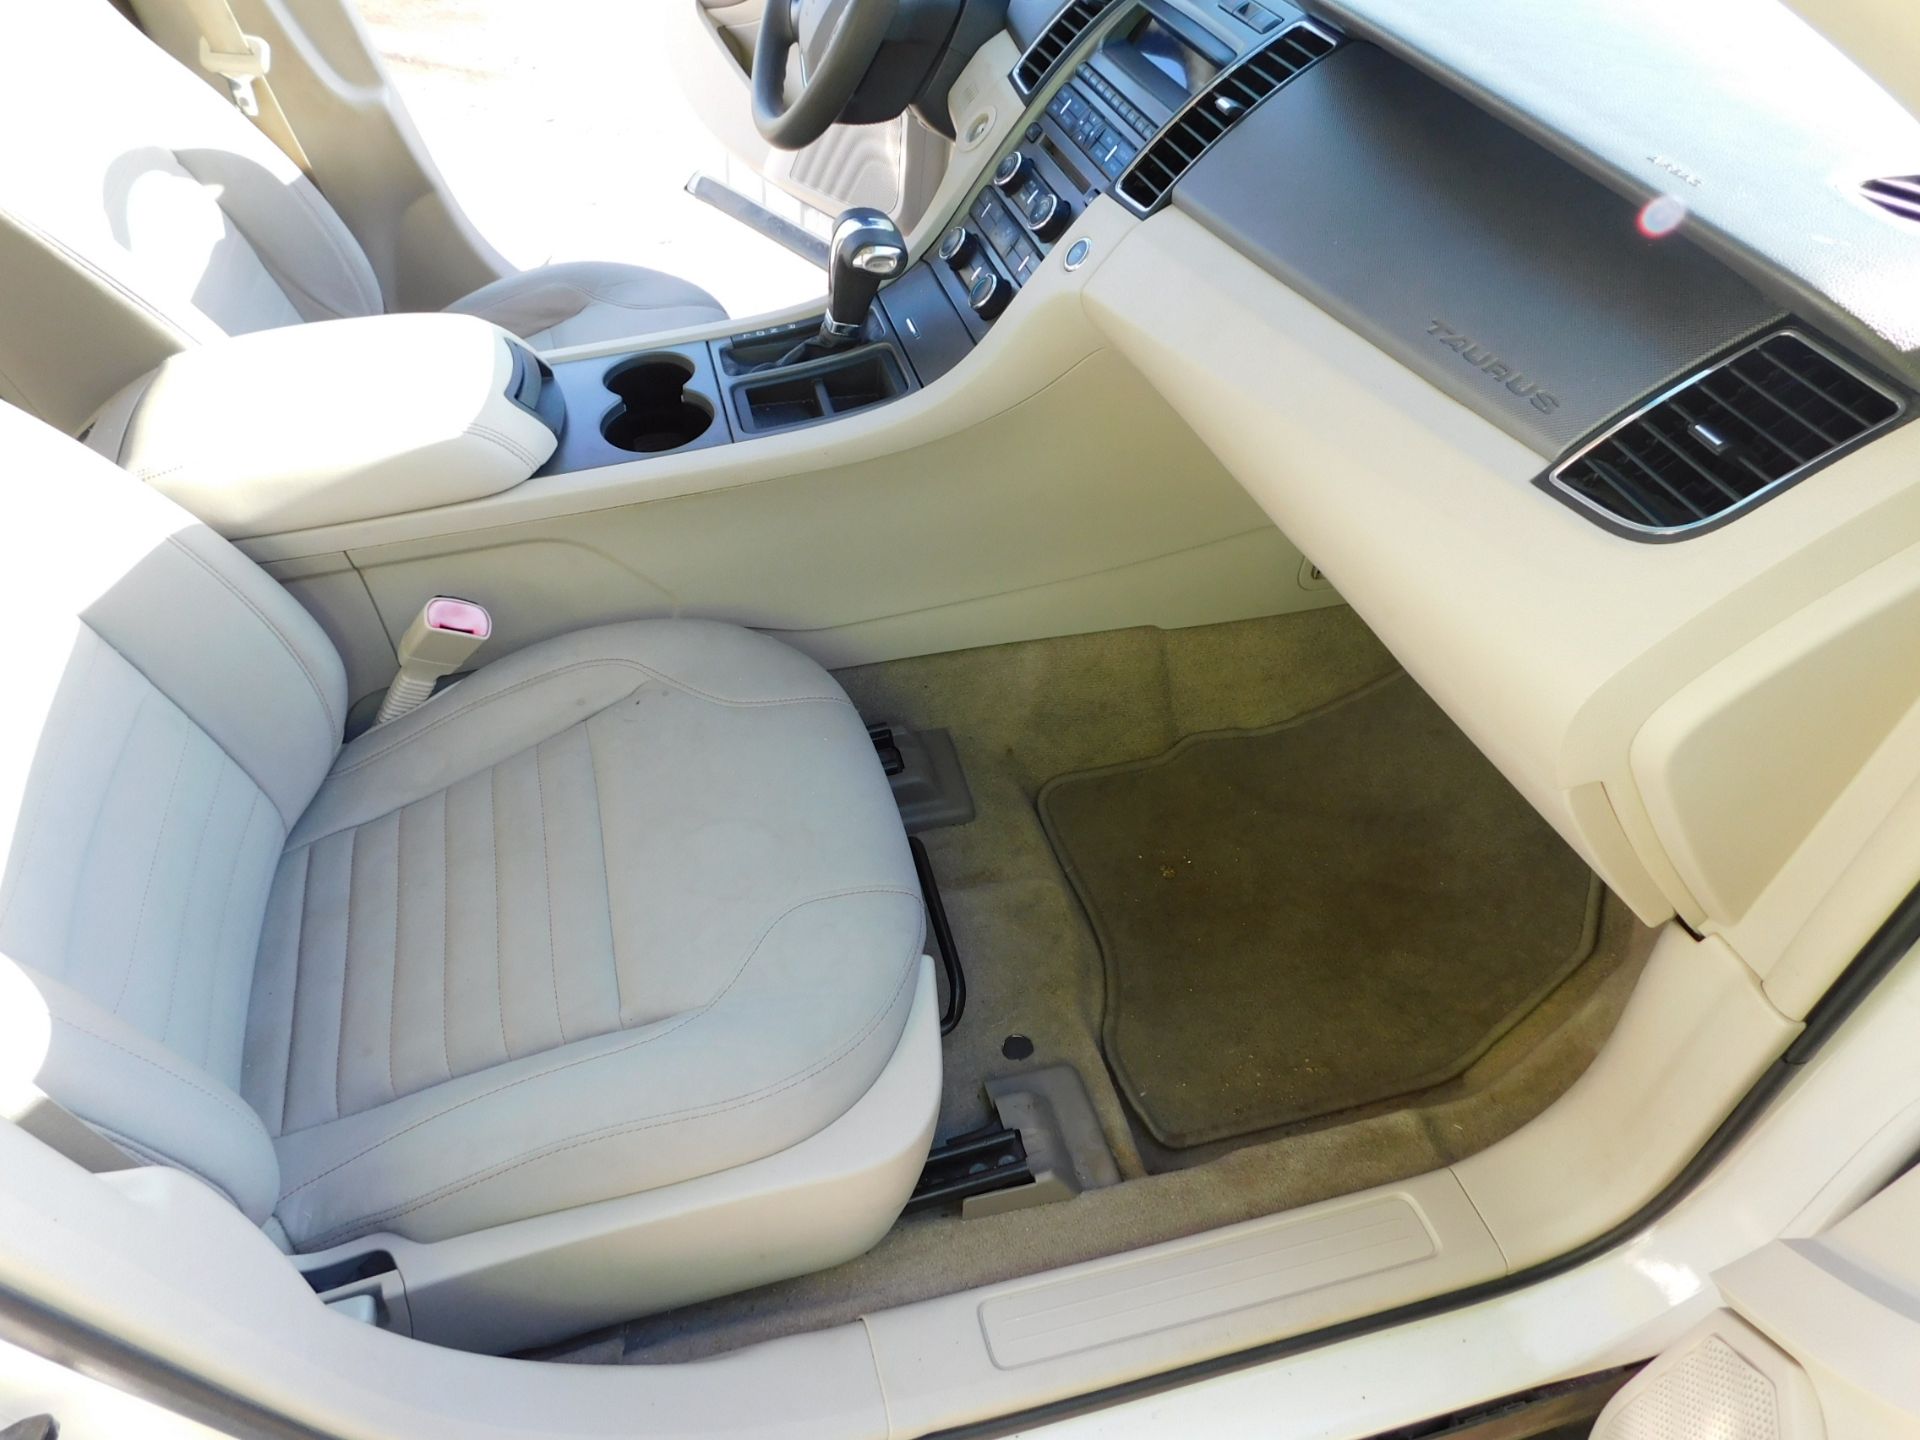 2011 Ford Taurus 4-Door Sedan vin 1FAHP2DWXBG163330, Automatic Transmission, PW,PL, AC, Cloth - Image 36 of 41